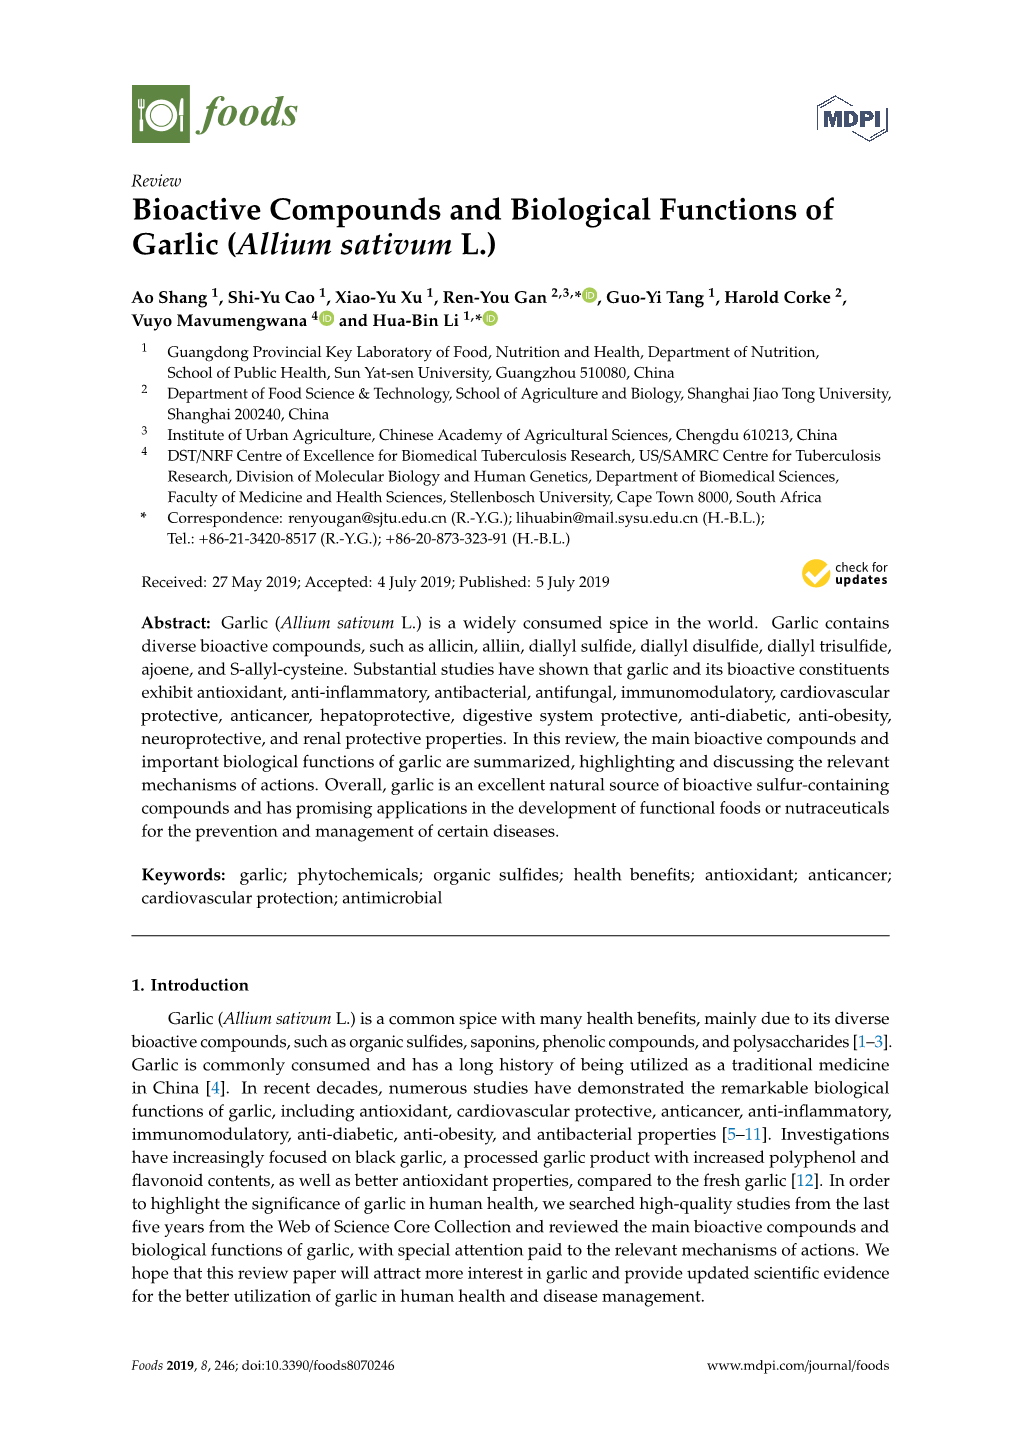 Bioactive Compounds and Biological Functions of Garlic (Allium Sativum L.)